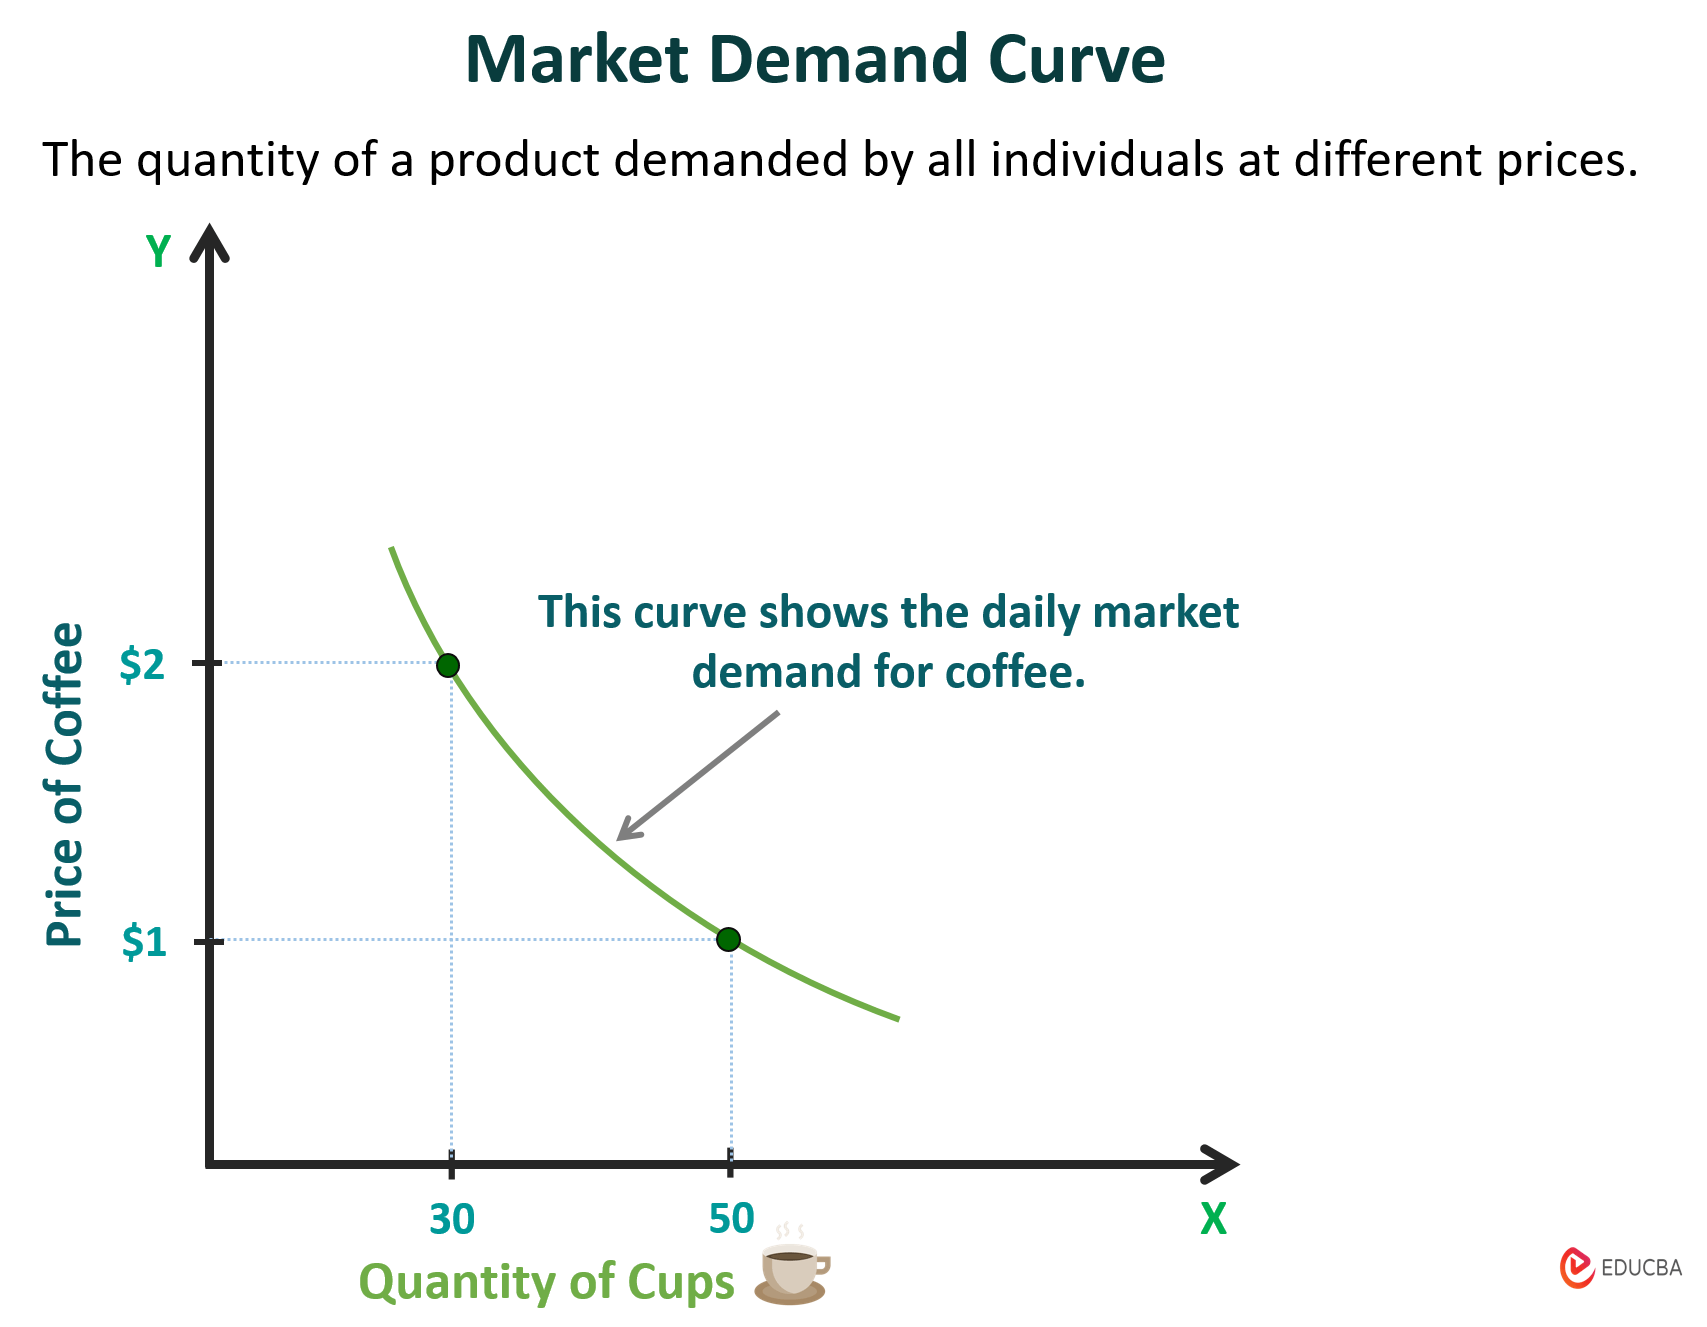 Market Demand Curve